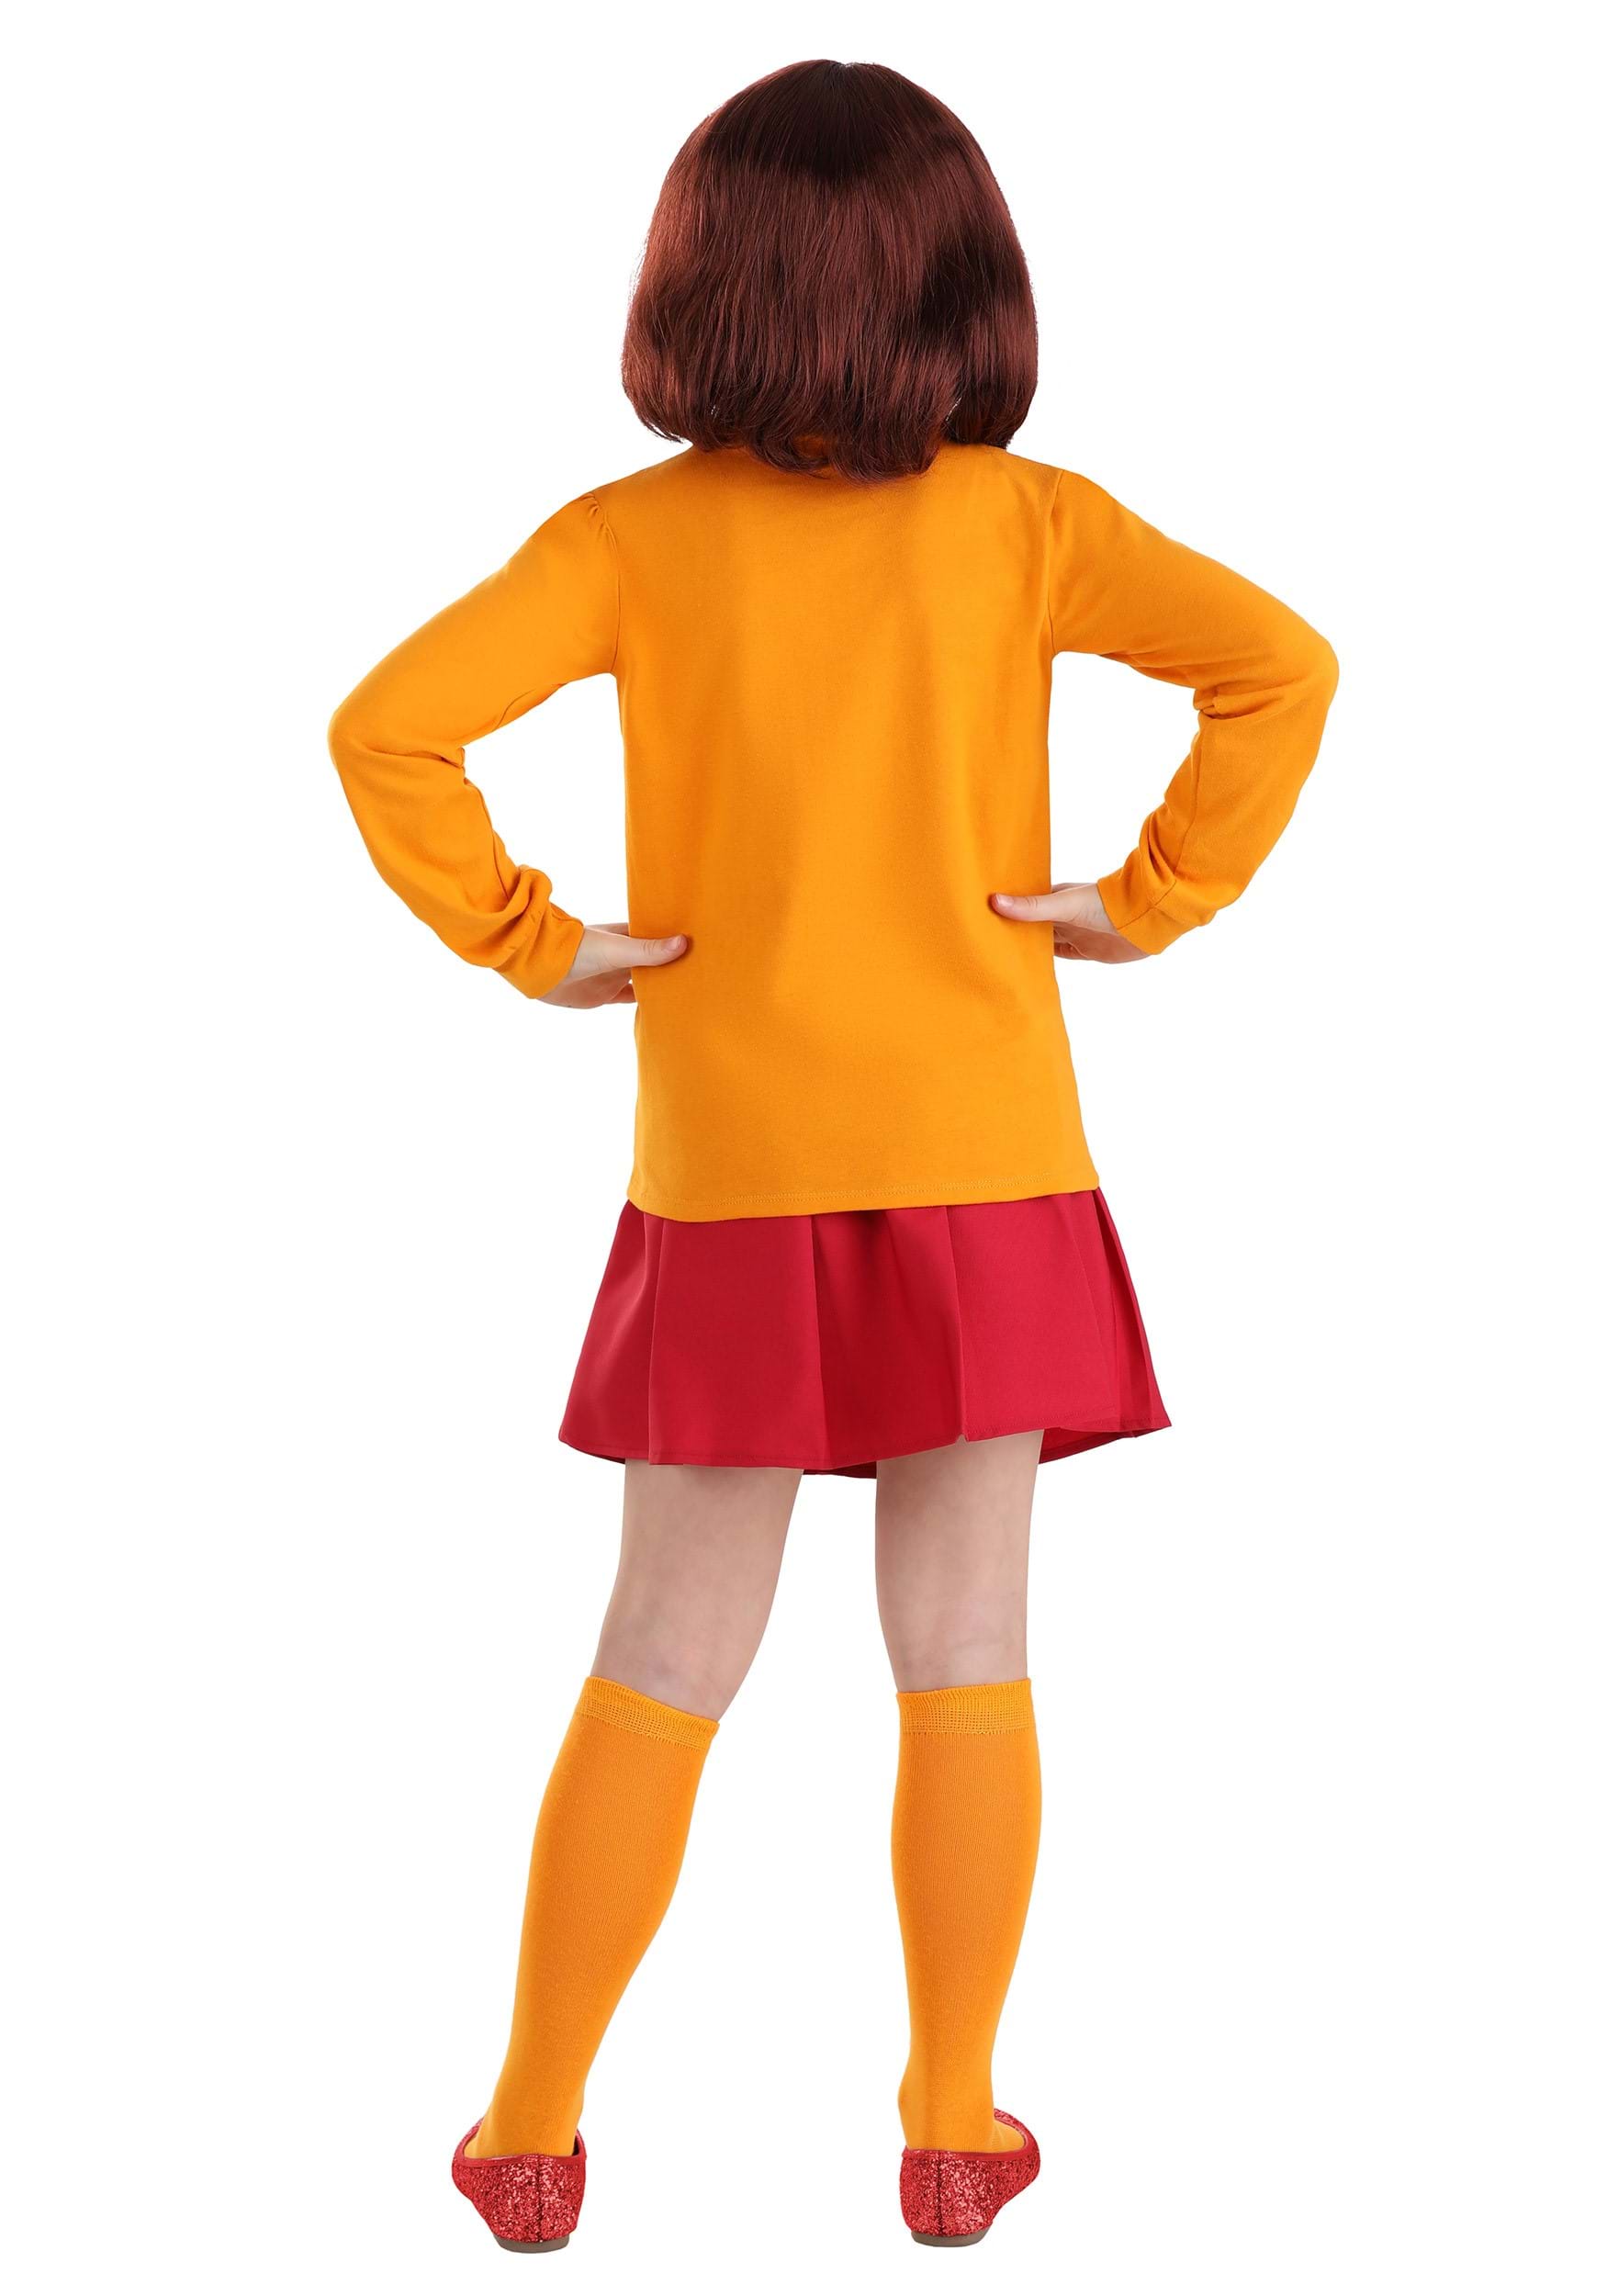 Scooby Doo Velma Costume for Kids